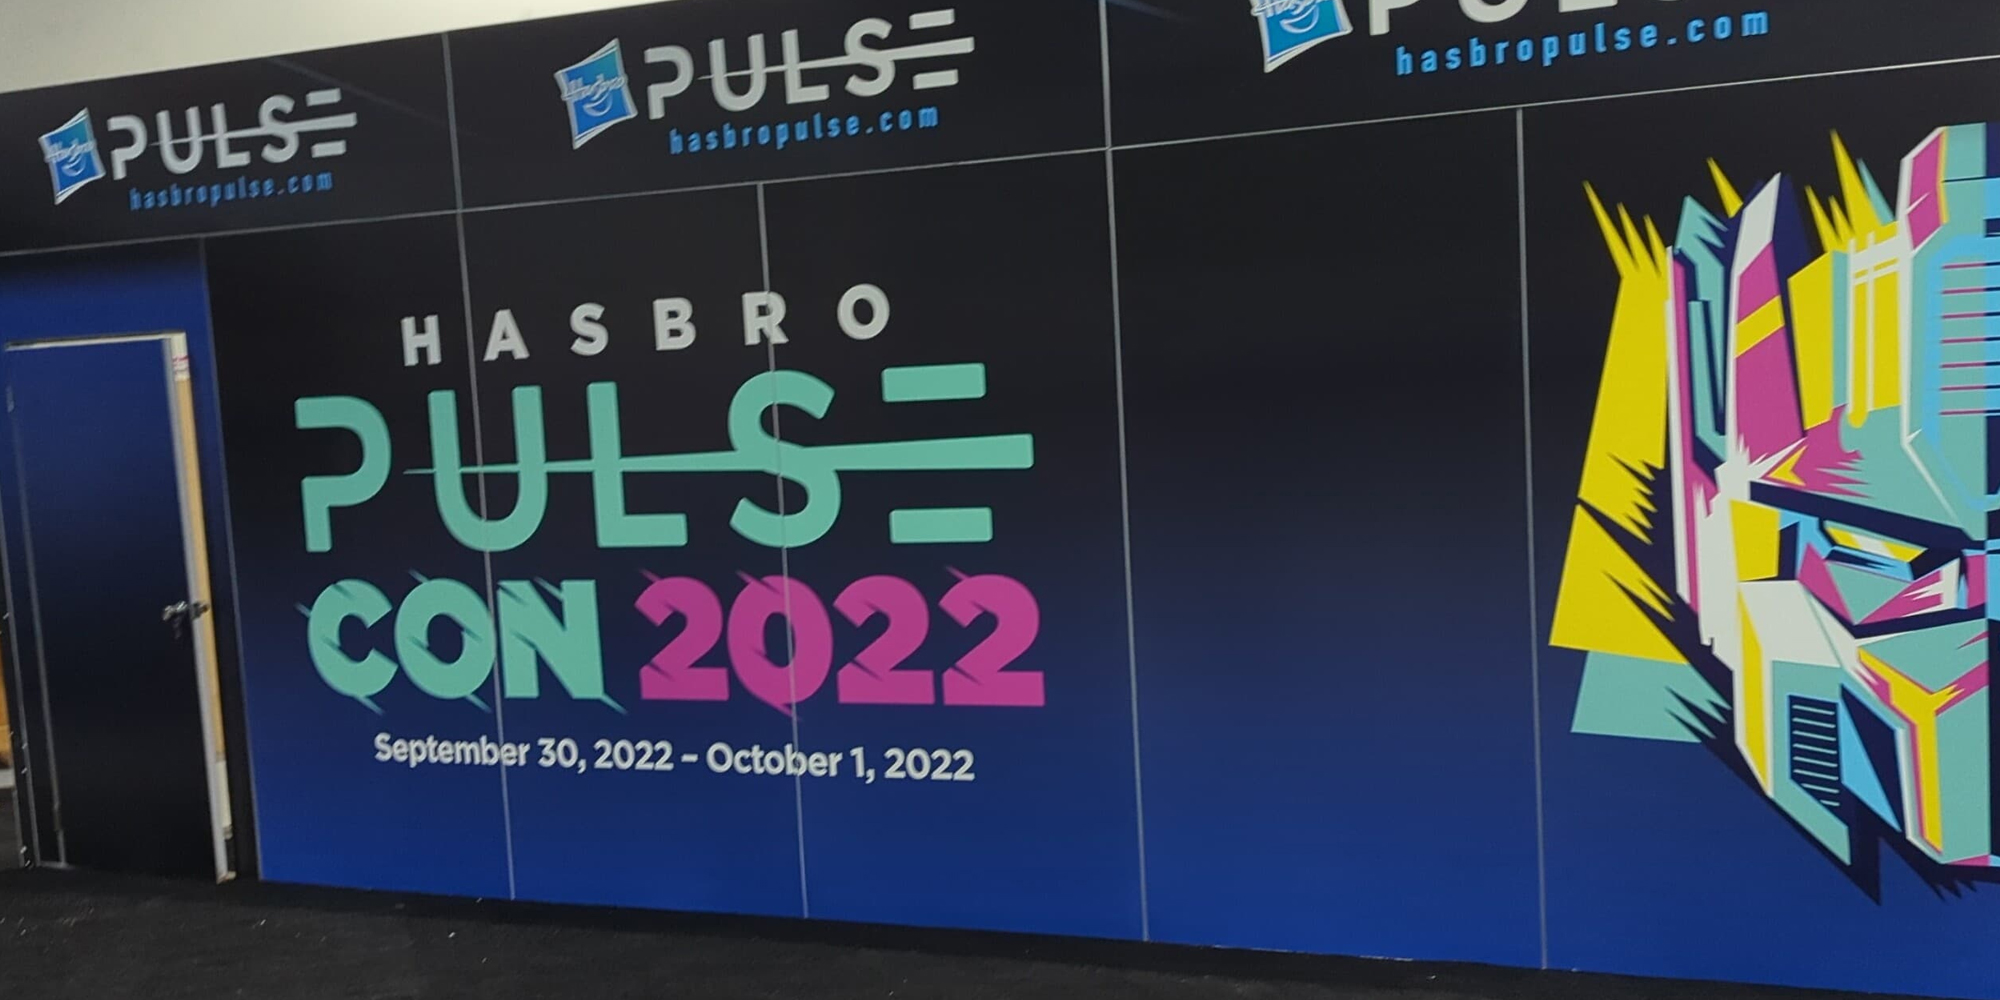 Hasbro Pulse Con 2022 Will Take Place Sept. 30 - Oct. 1!